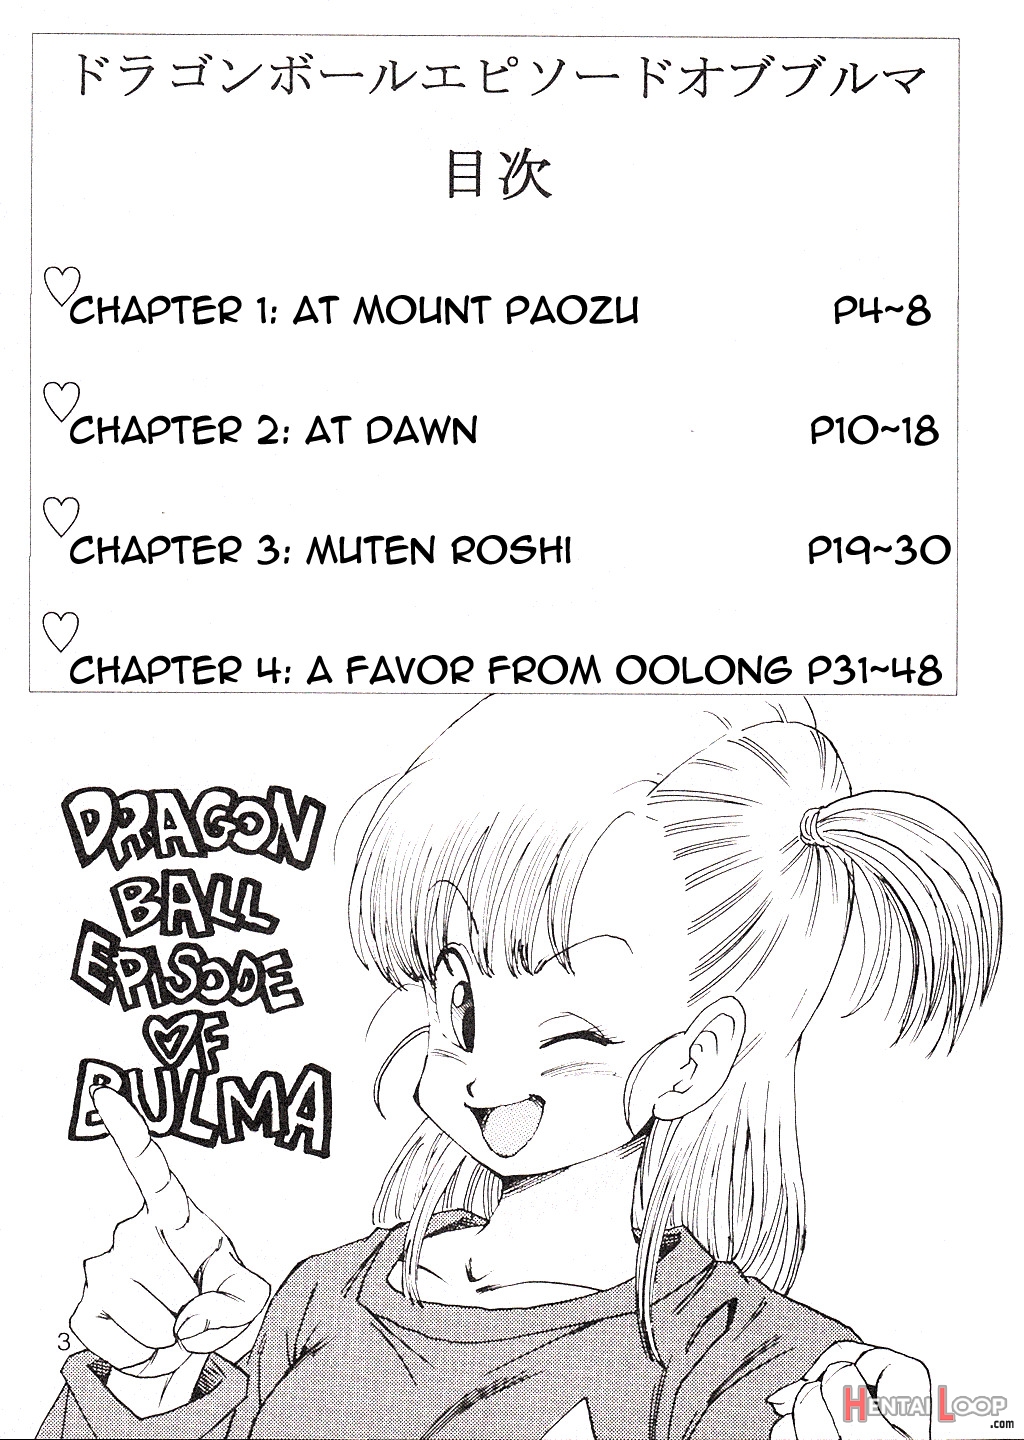 Dragon Ball Eb Episode Of Bulma page 4